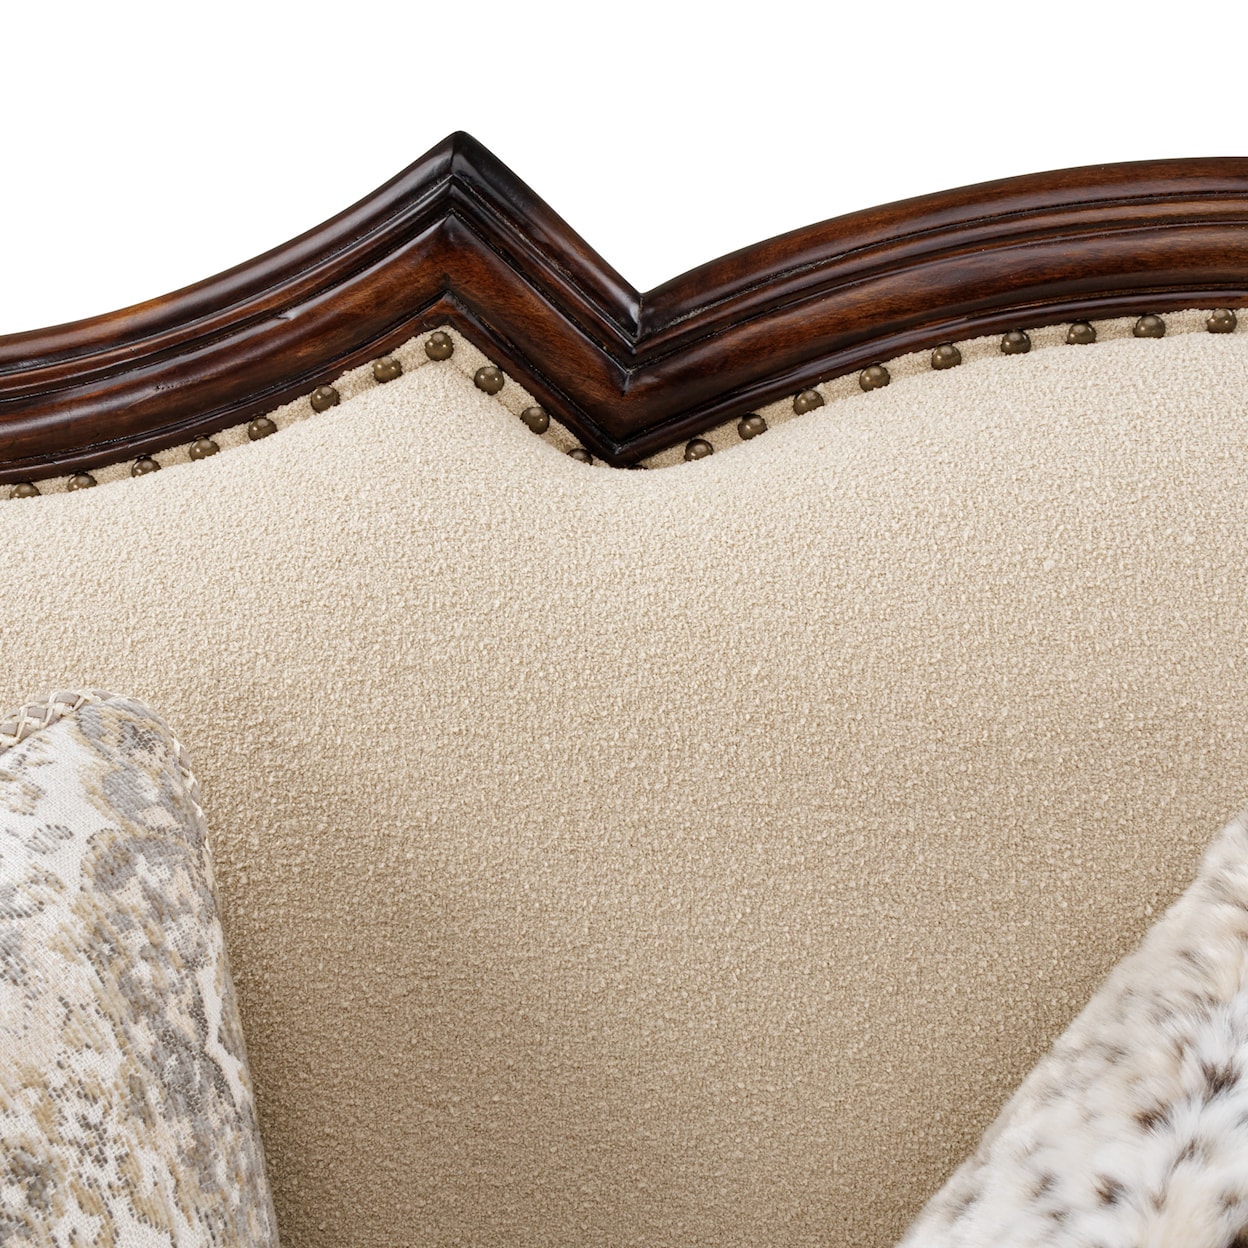 Michael Amini Chamberi 4-Piece Upholstered Sectional Sofa